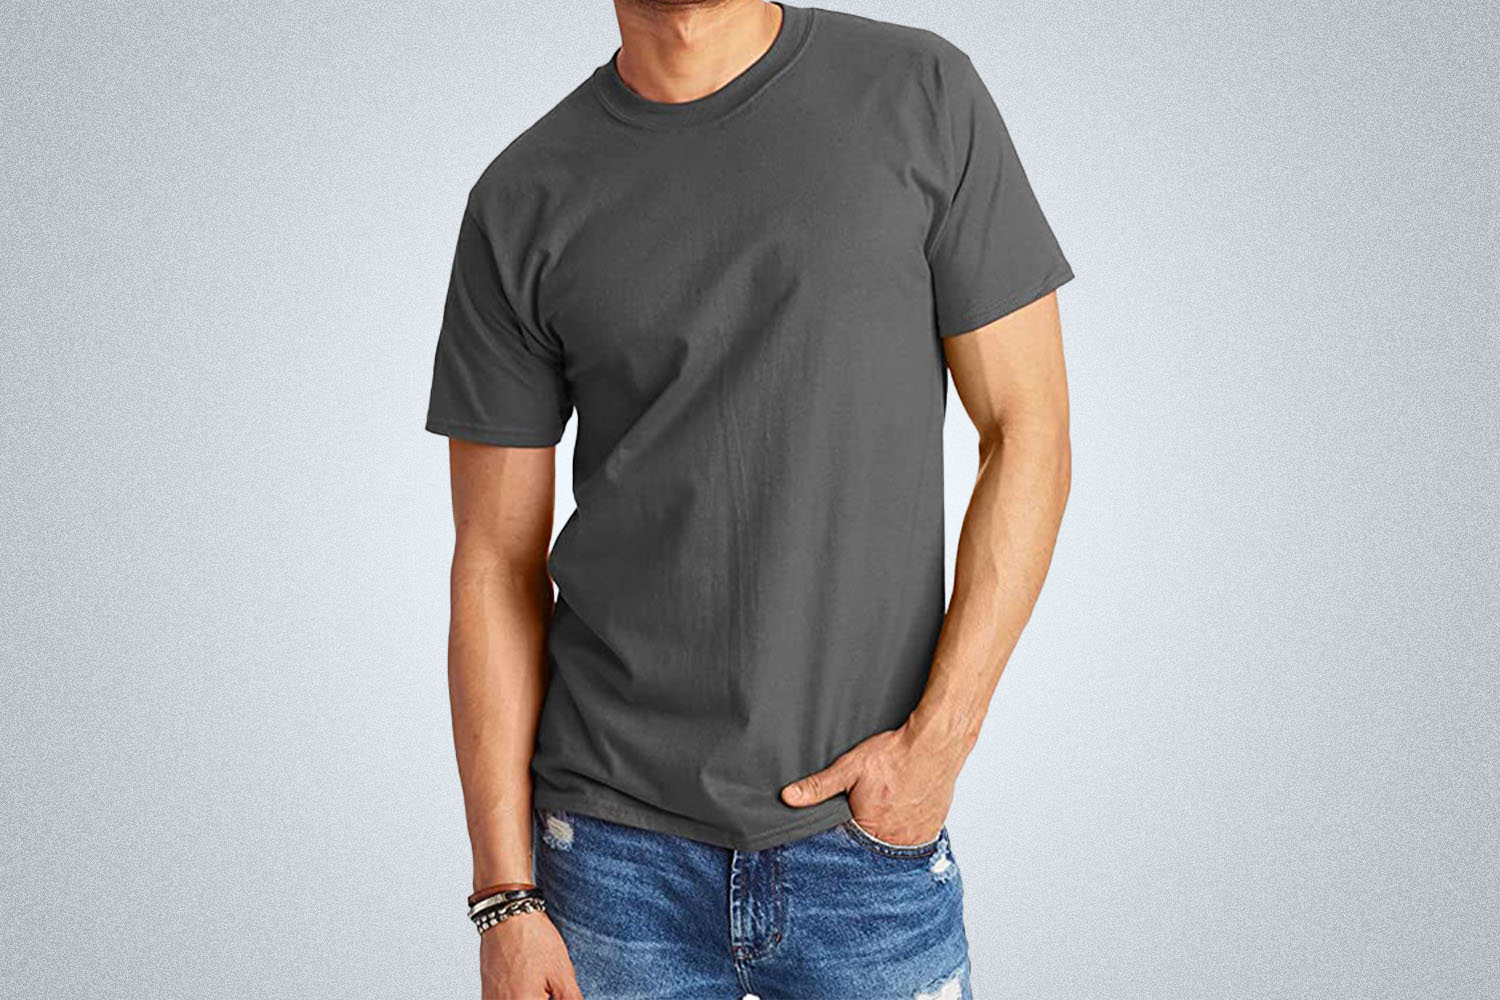 Hanes Beefy Classic Crewneck Cotton T-Shirt